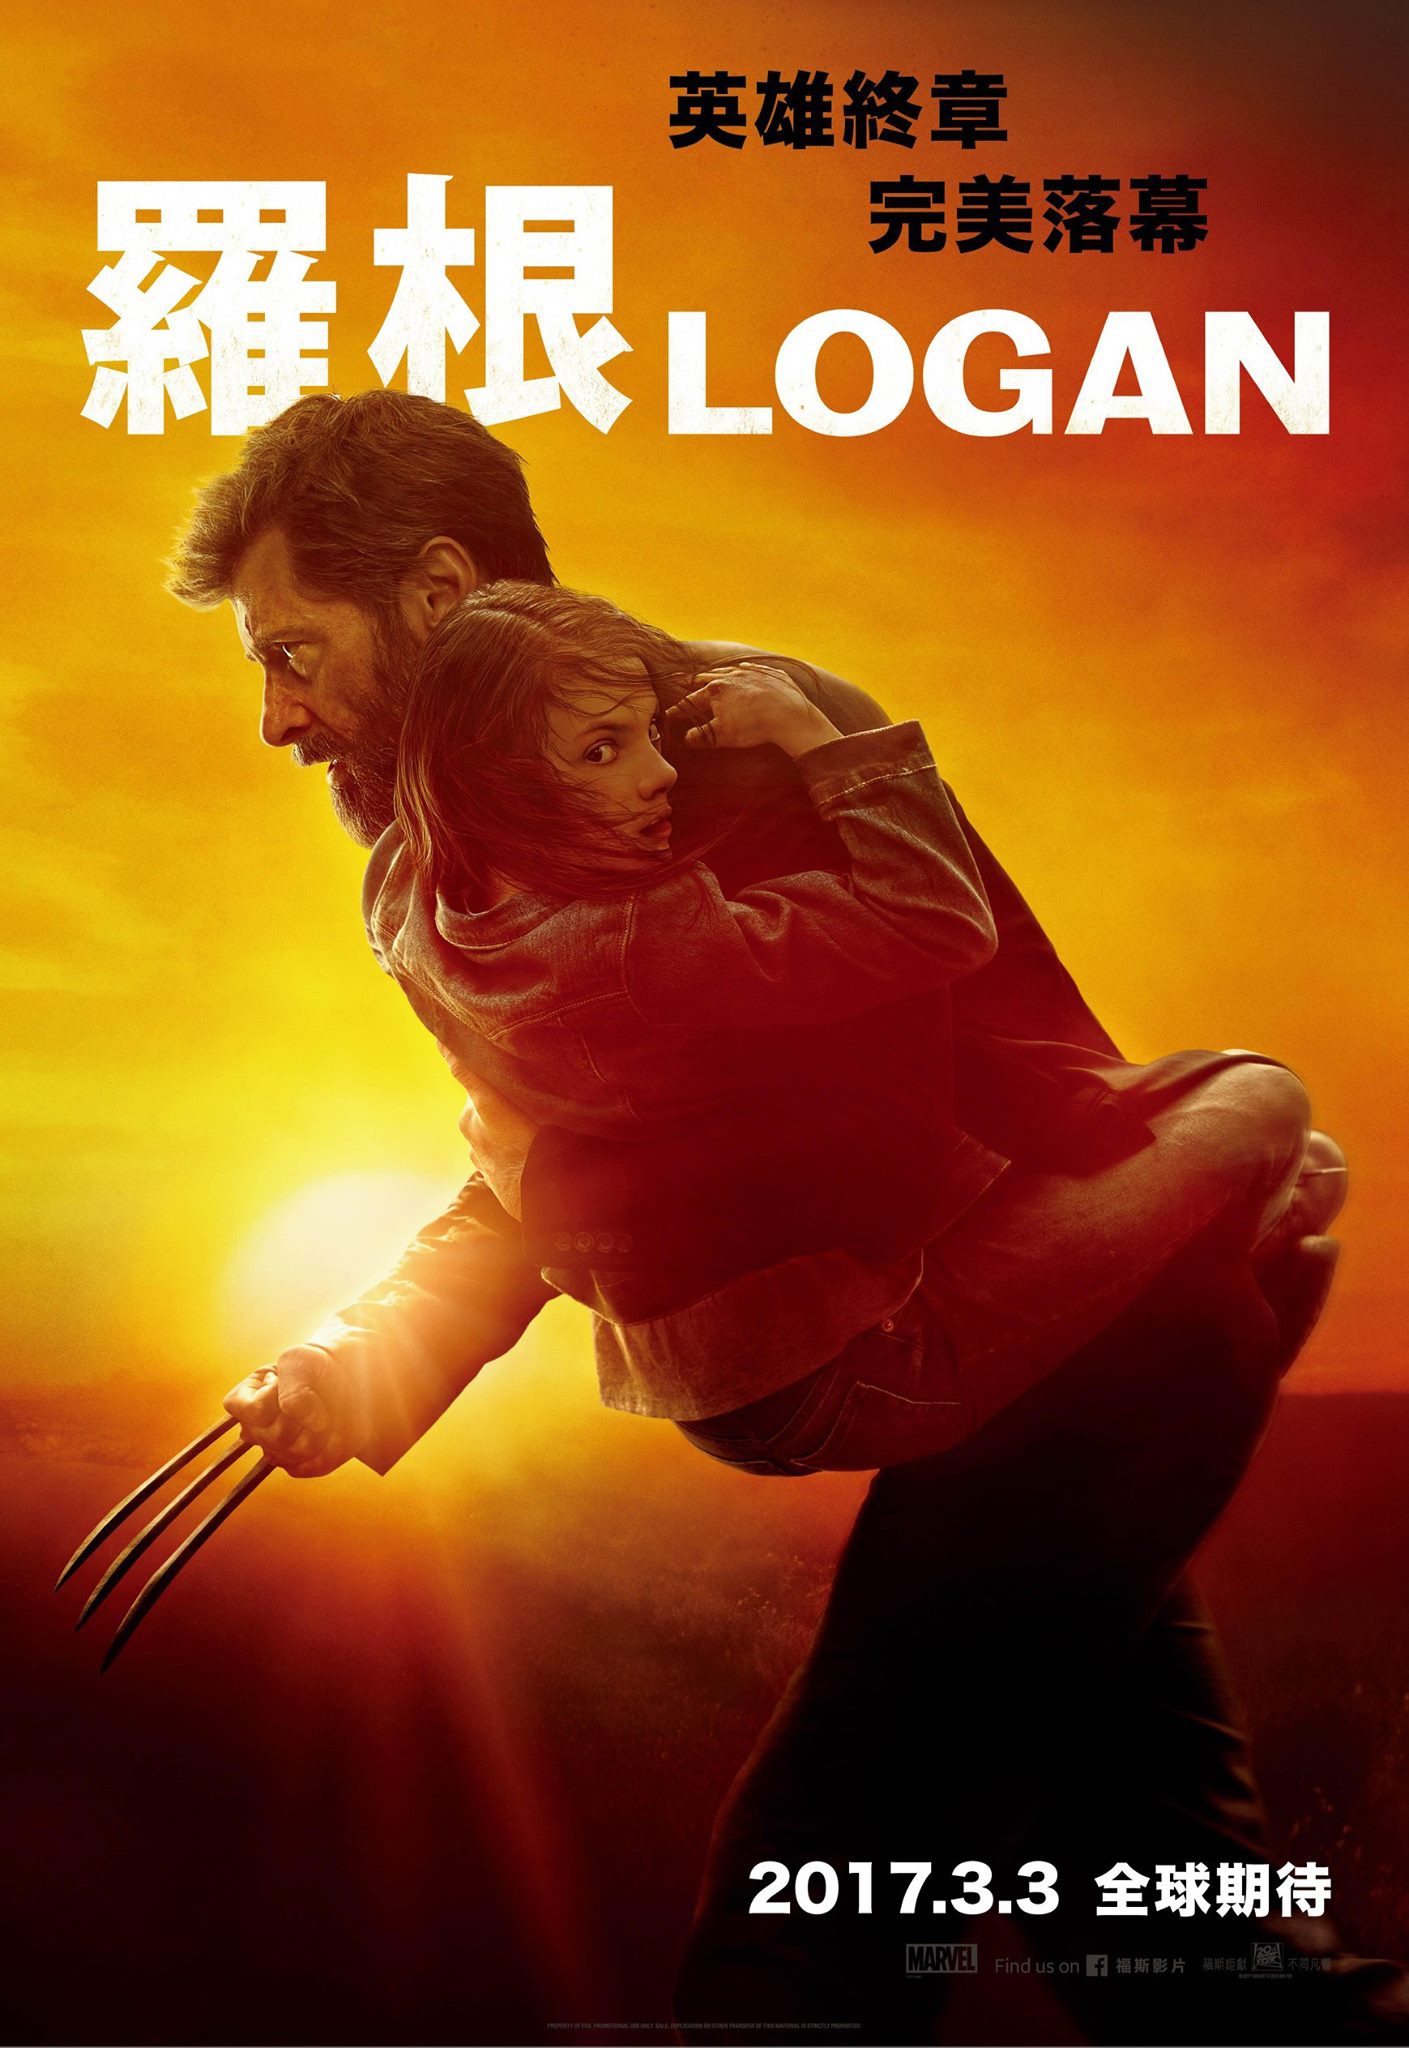 Mega Sized Movie Poster Image for Logan (#4 of 7)